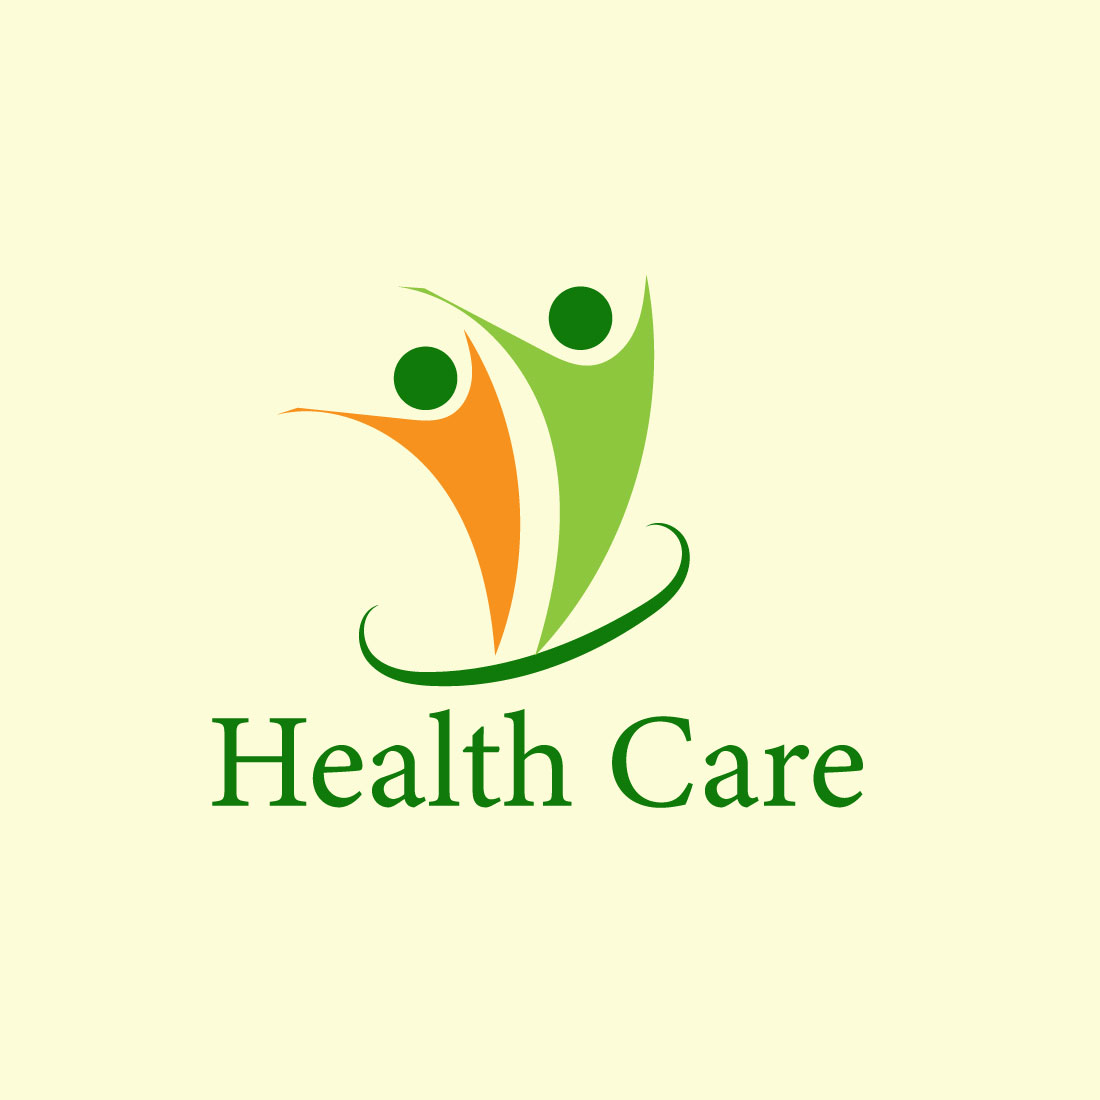 Free wellness people health logo cover image.